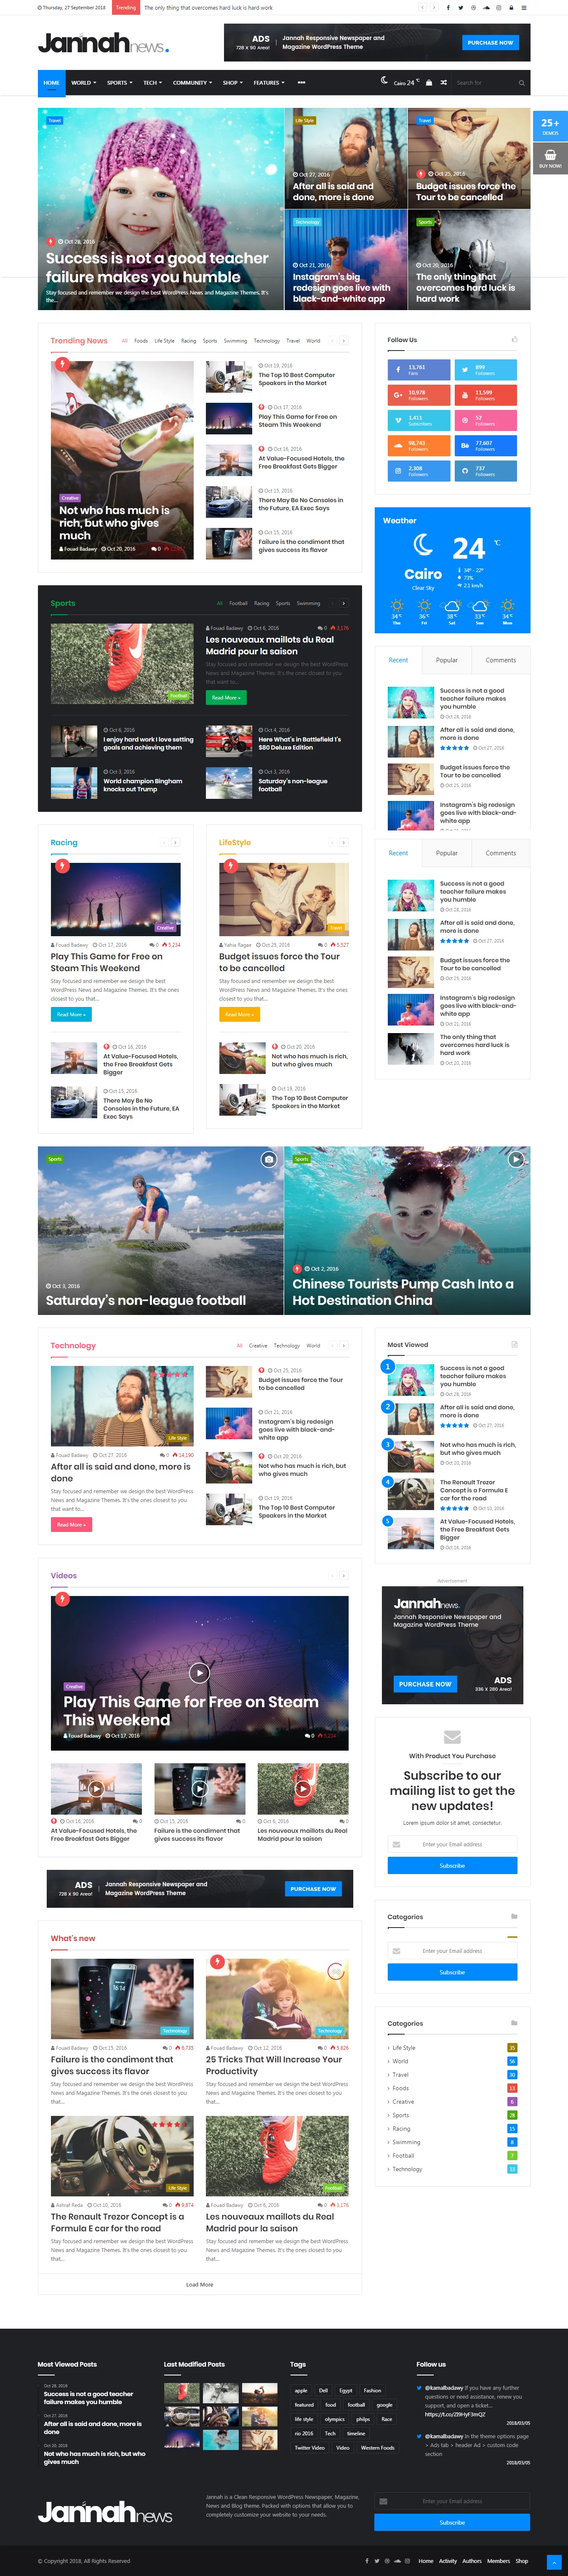 Jannah News - Best Premium Adsense Optimized WordPress Theme